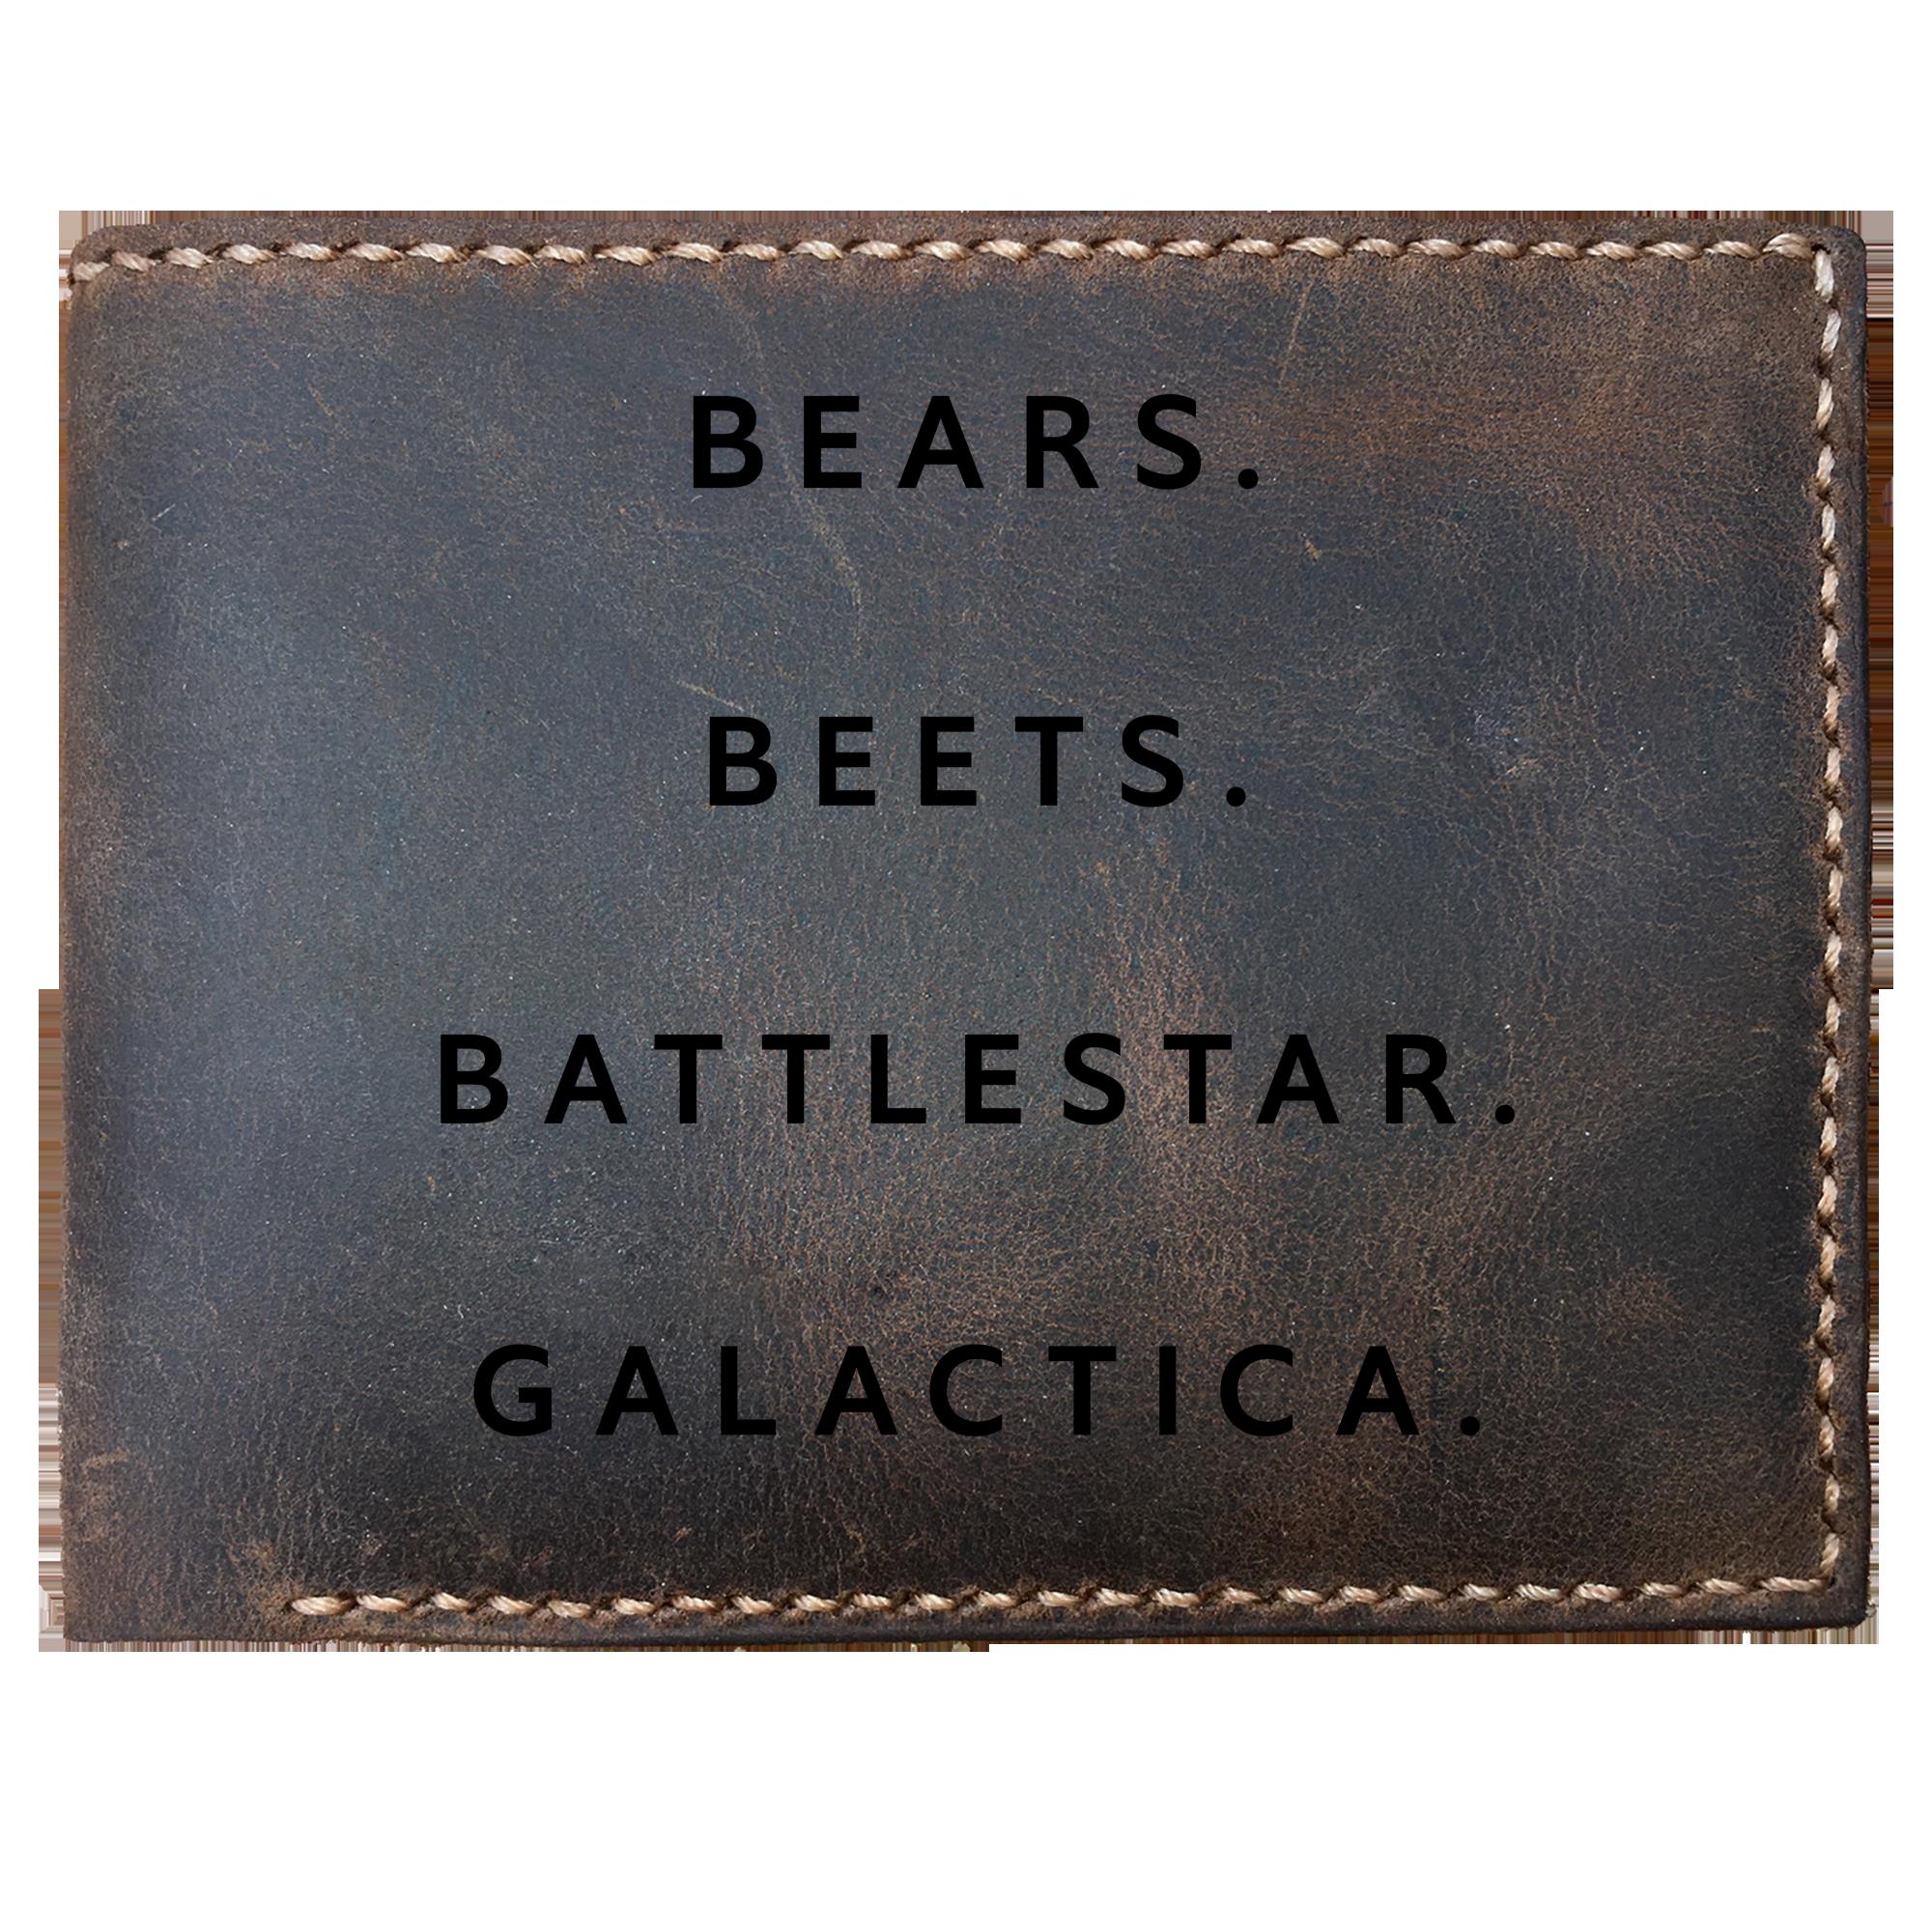 Skitongifts Funny Custom Laser Engraved Bifold Leather Wallet For Men, Bears Beets Battlestar Galactica